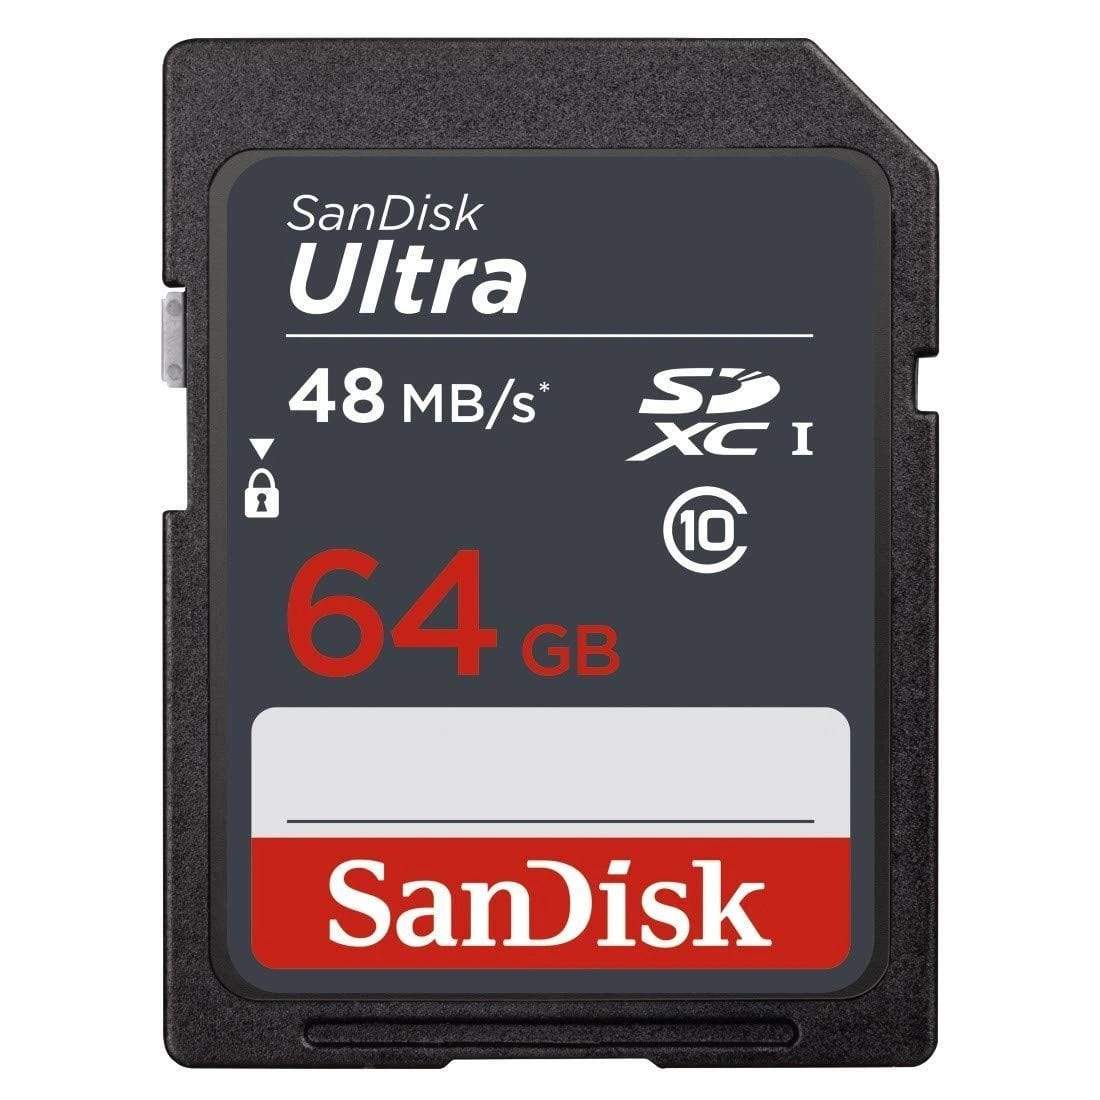 Sandisk 64GB Ultra SDHC UHS-I Memory Card for Camera Hi-Speed-Memory Cards-dealsplant